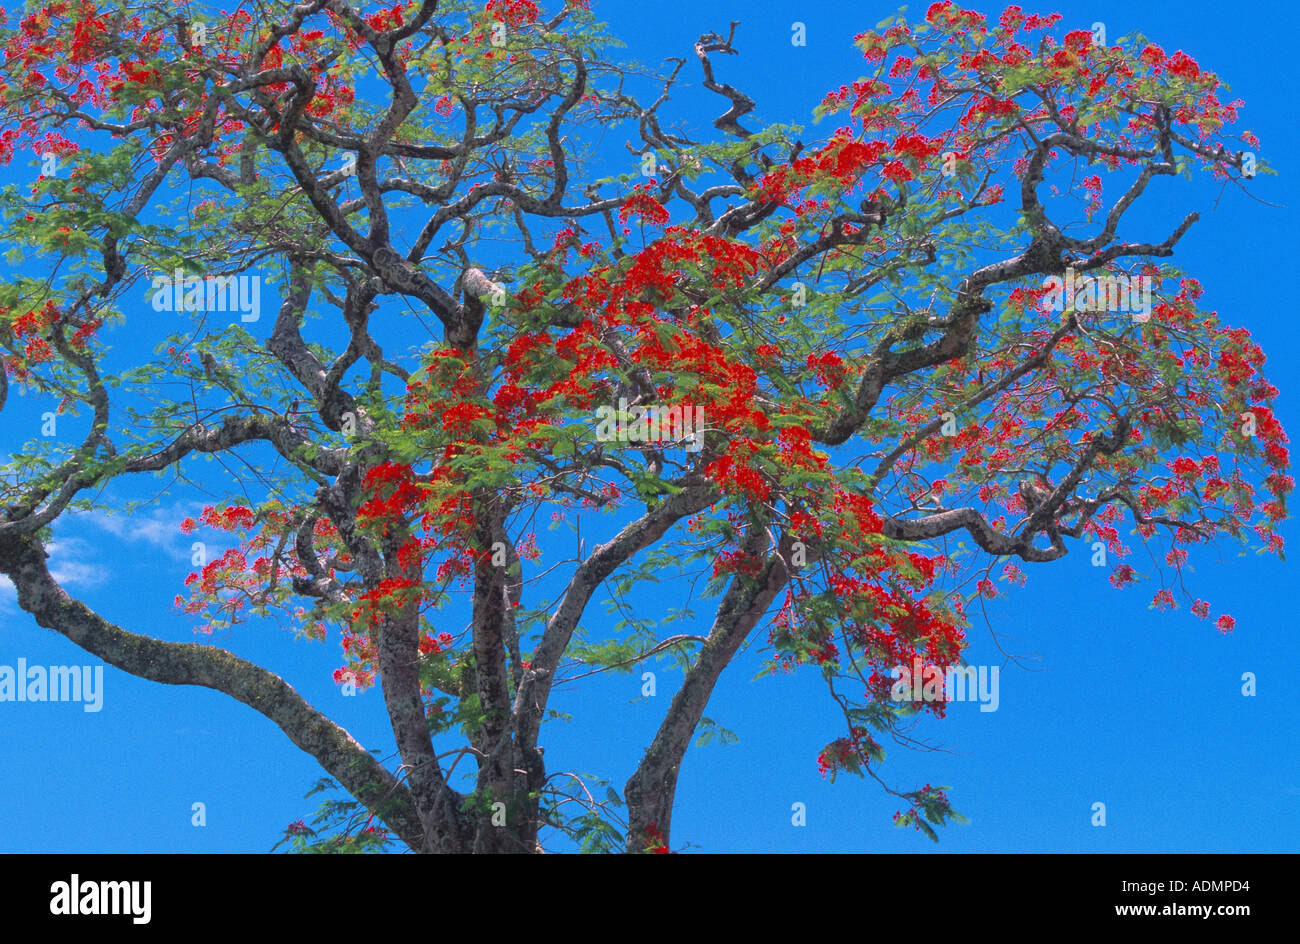 Australian flame tree (Brachychiton acerifolius, Sterculia acerifolia), blooming tree against blue sky, Cook Islands, Rarotonga Stock Photo